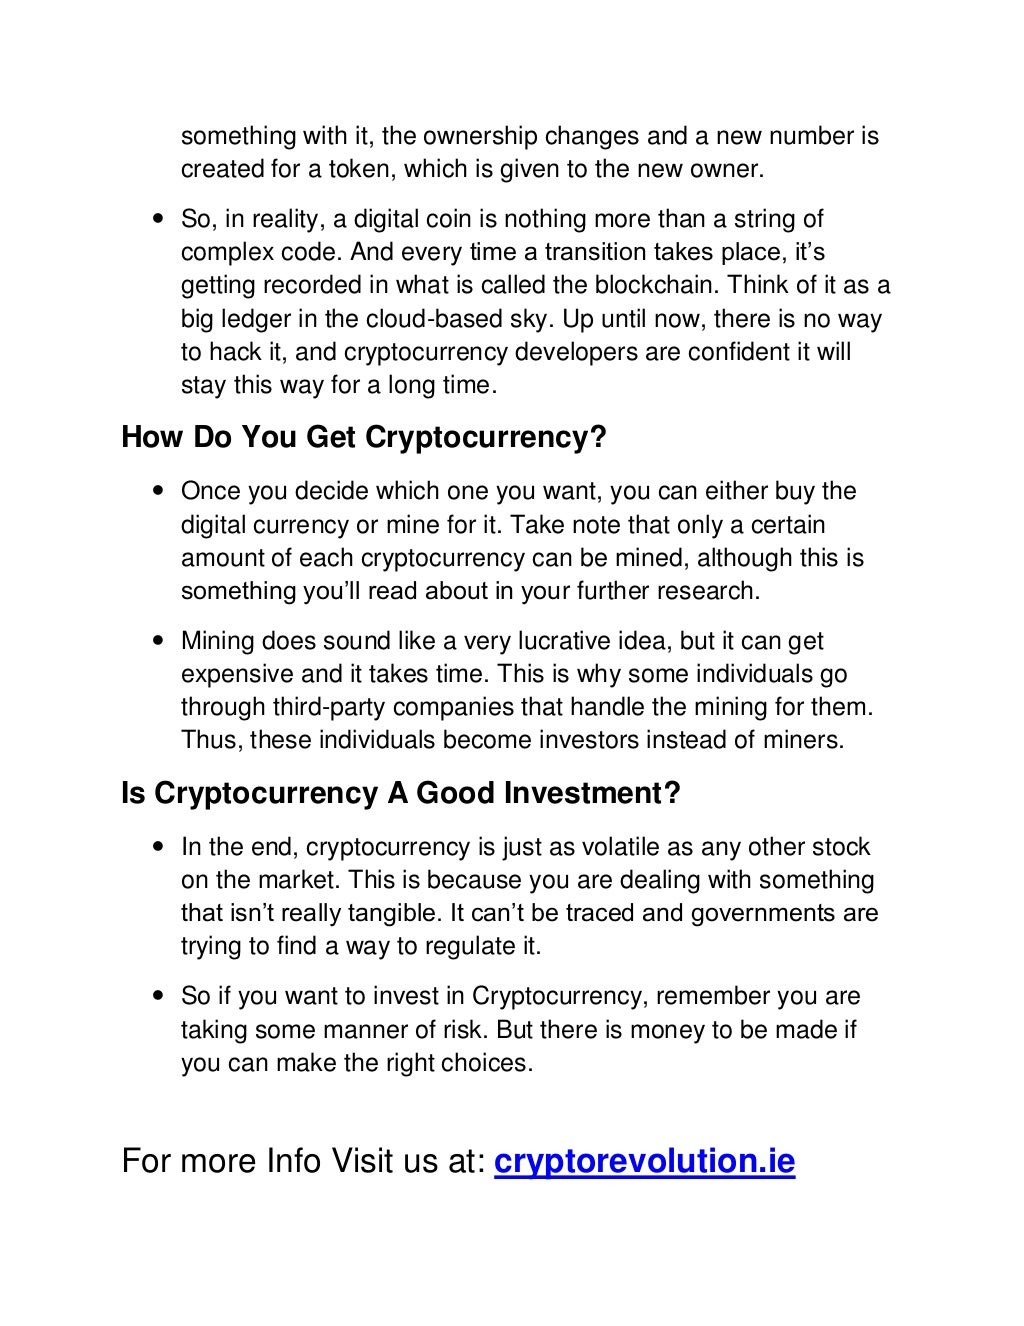 Crypto Revolution - Paul McCarthy Cork Cryptopreneur